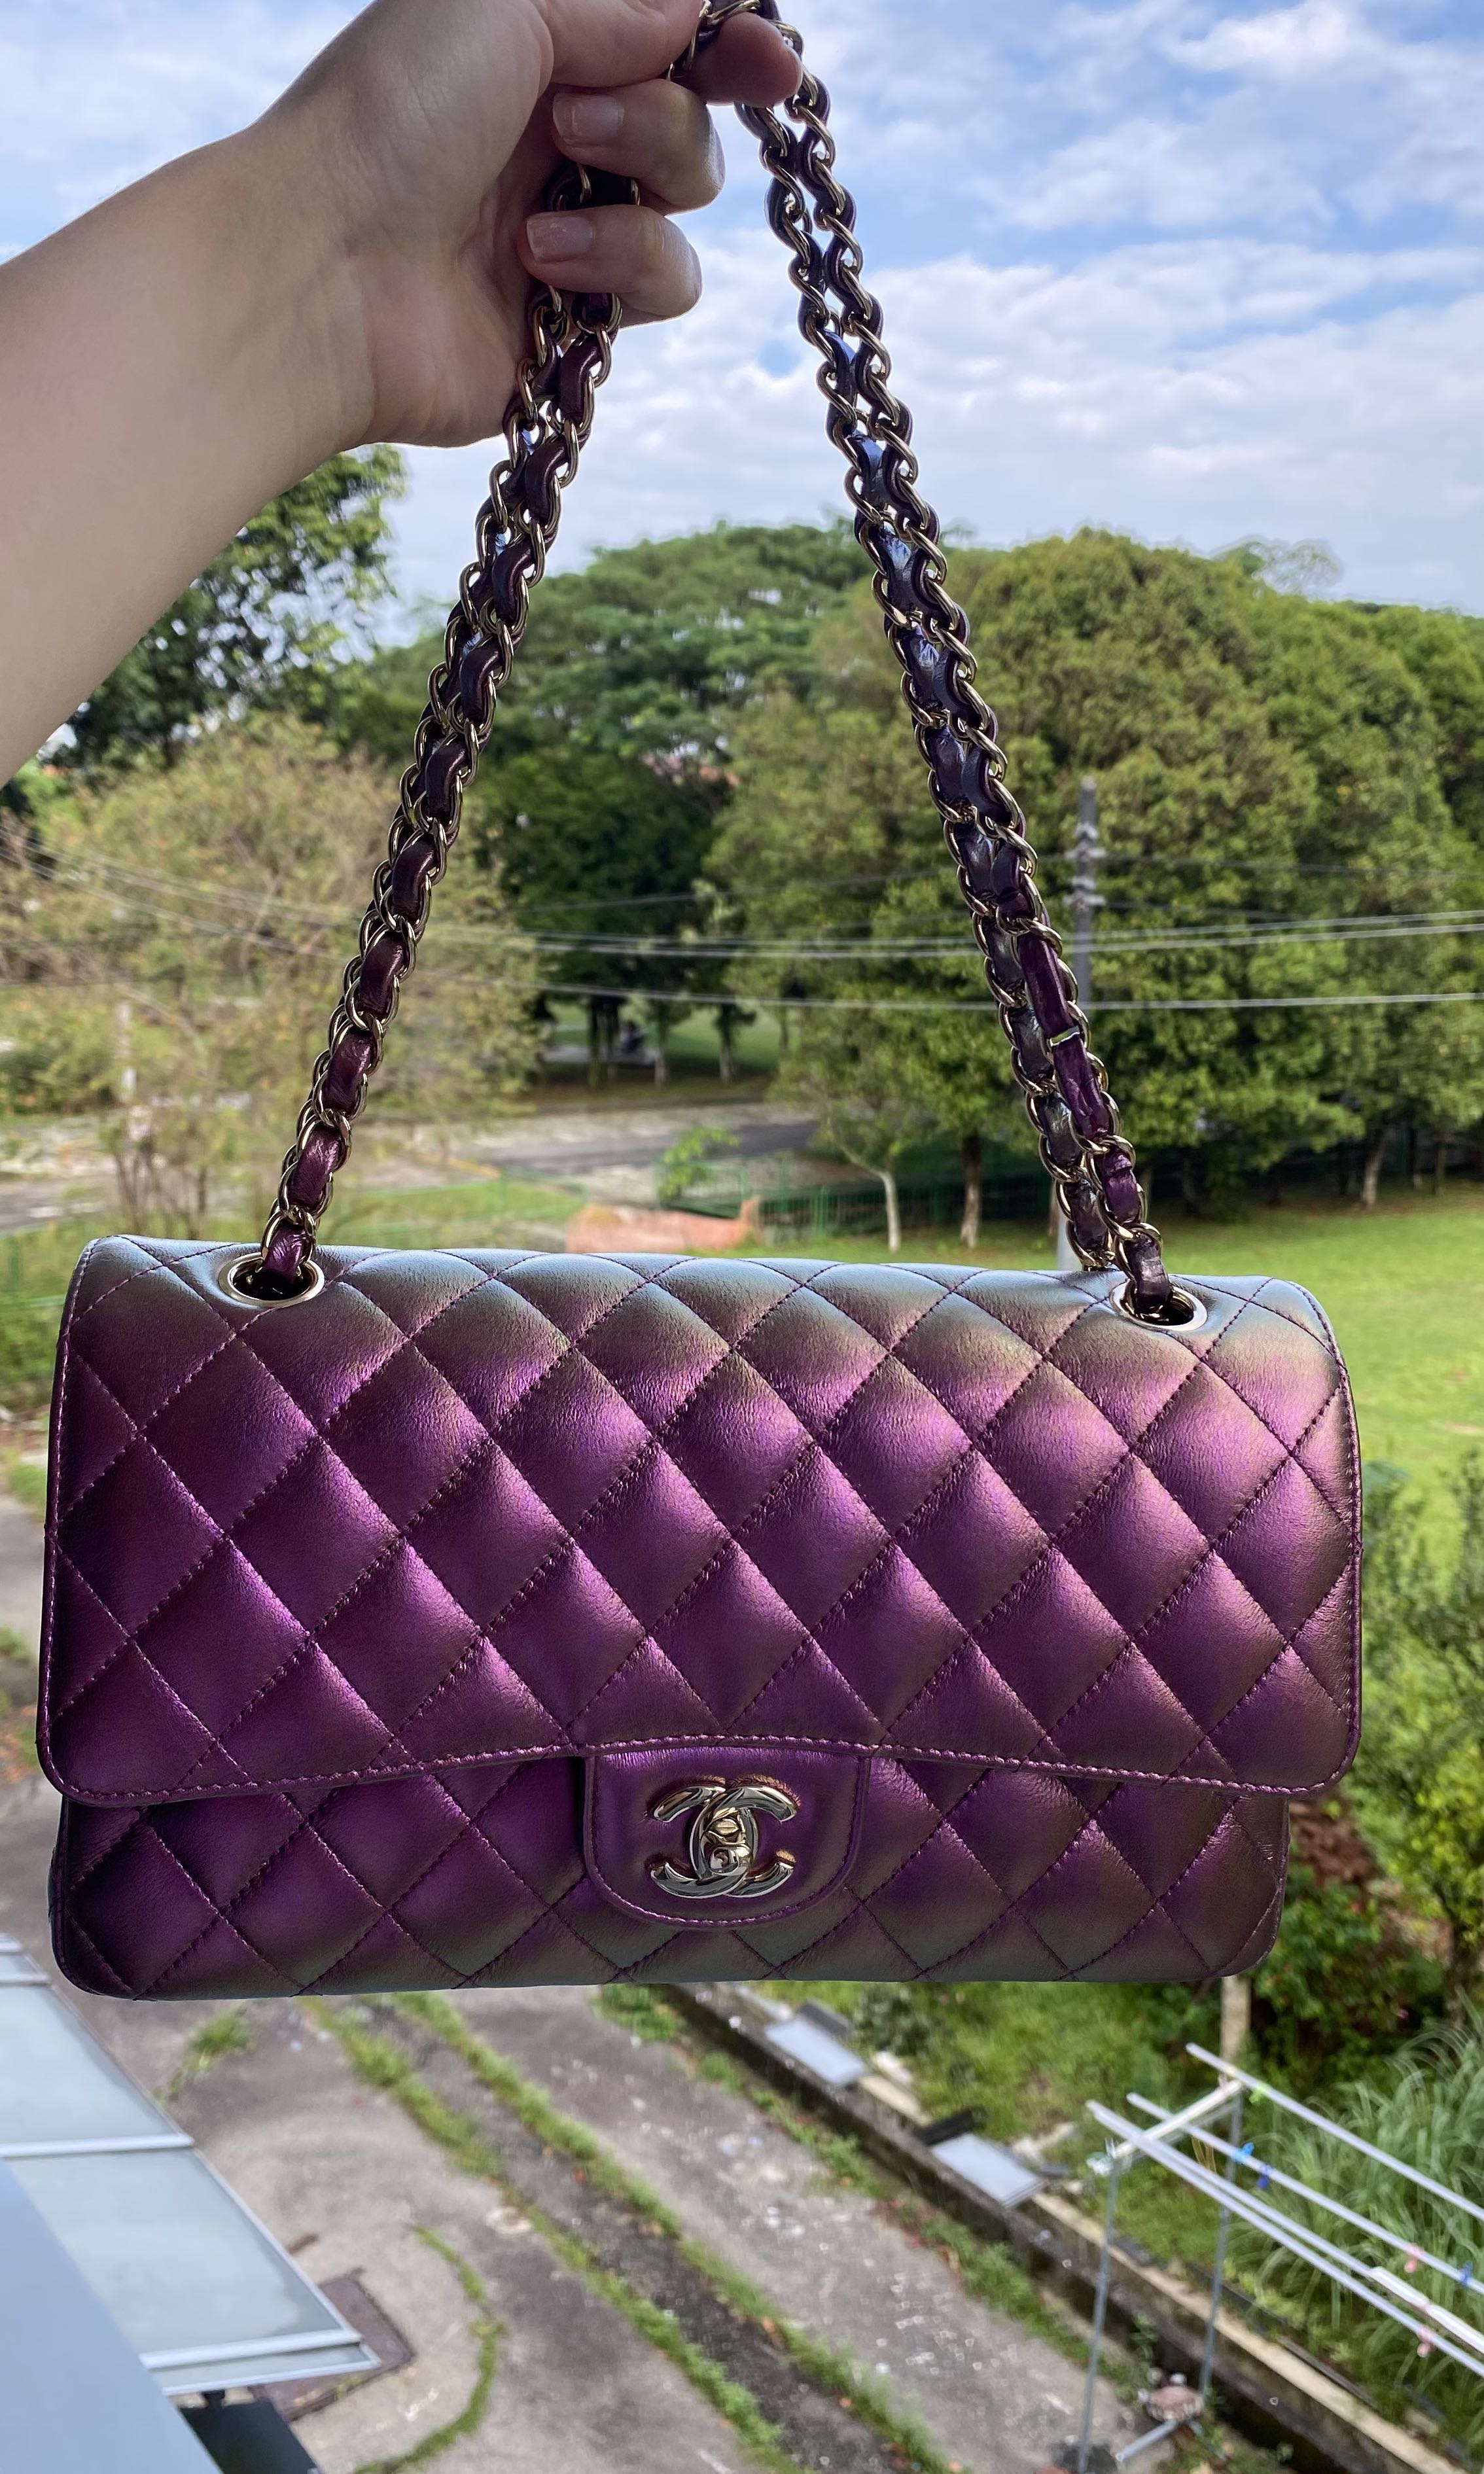 Chanel Flap Bag AS2318 B0497 NA114, Purple, One Size